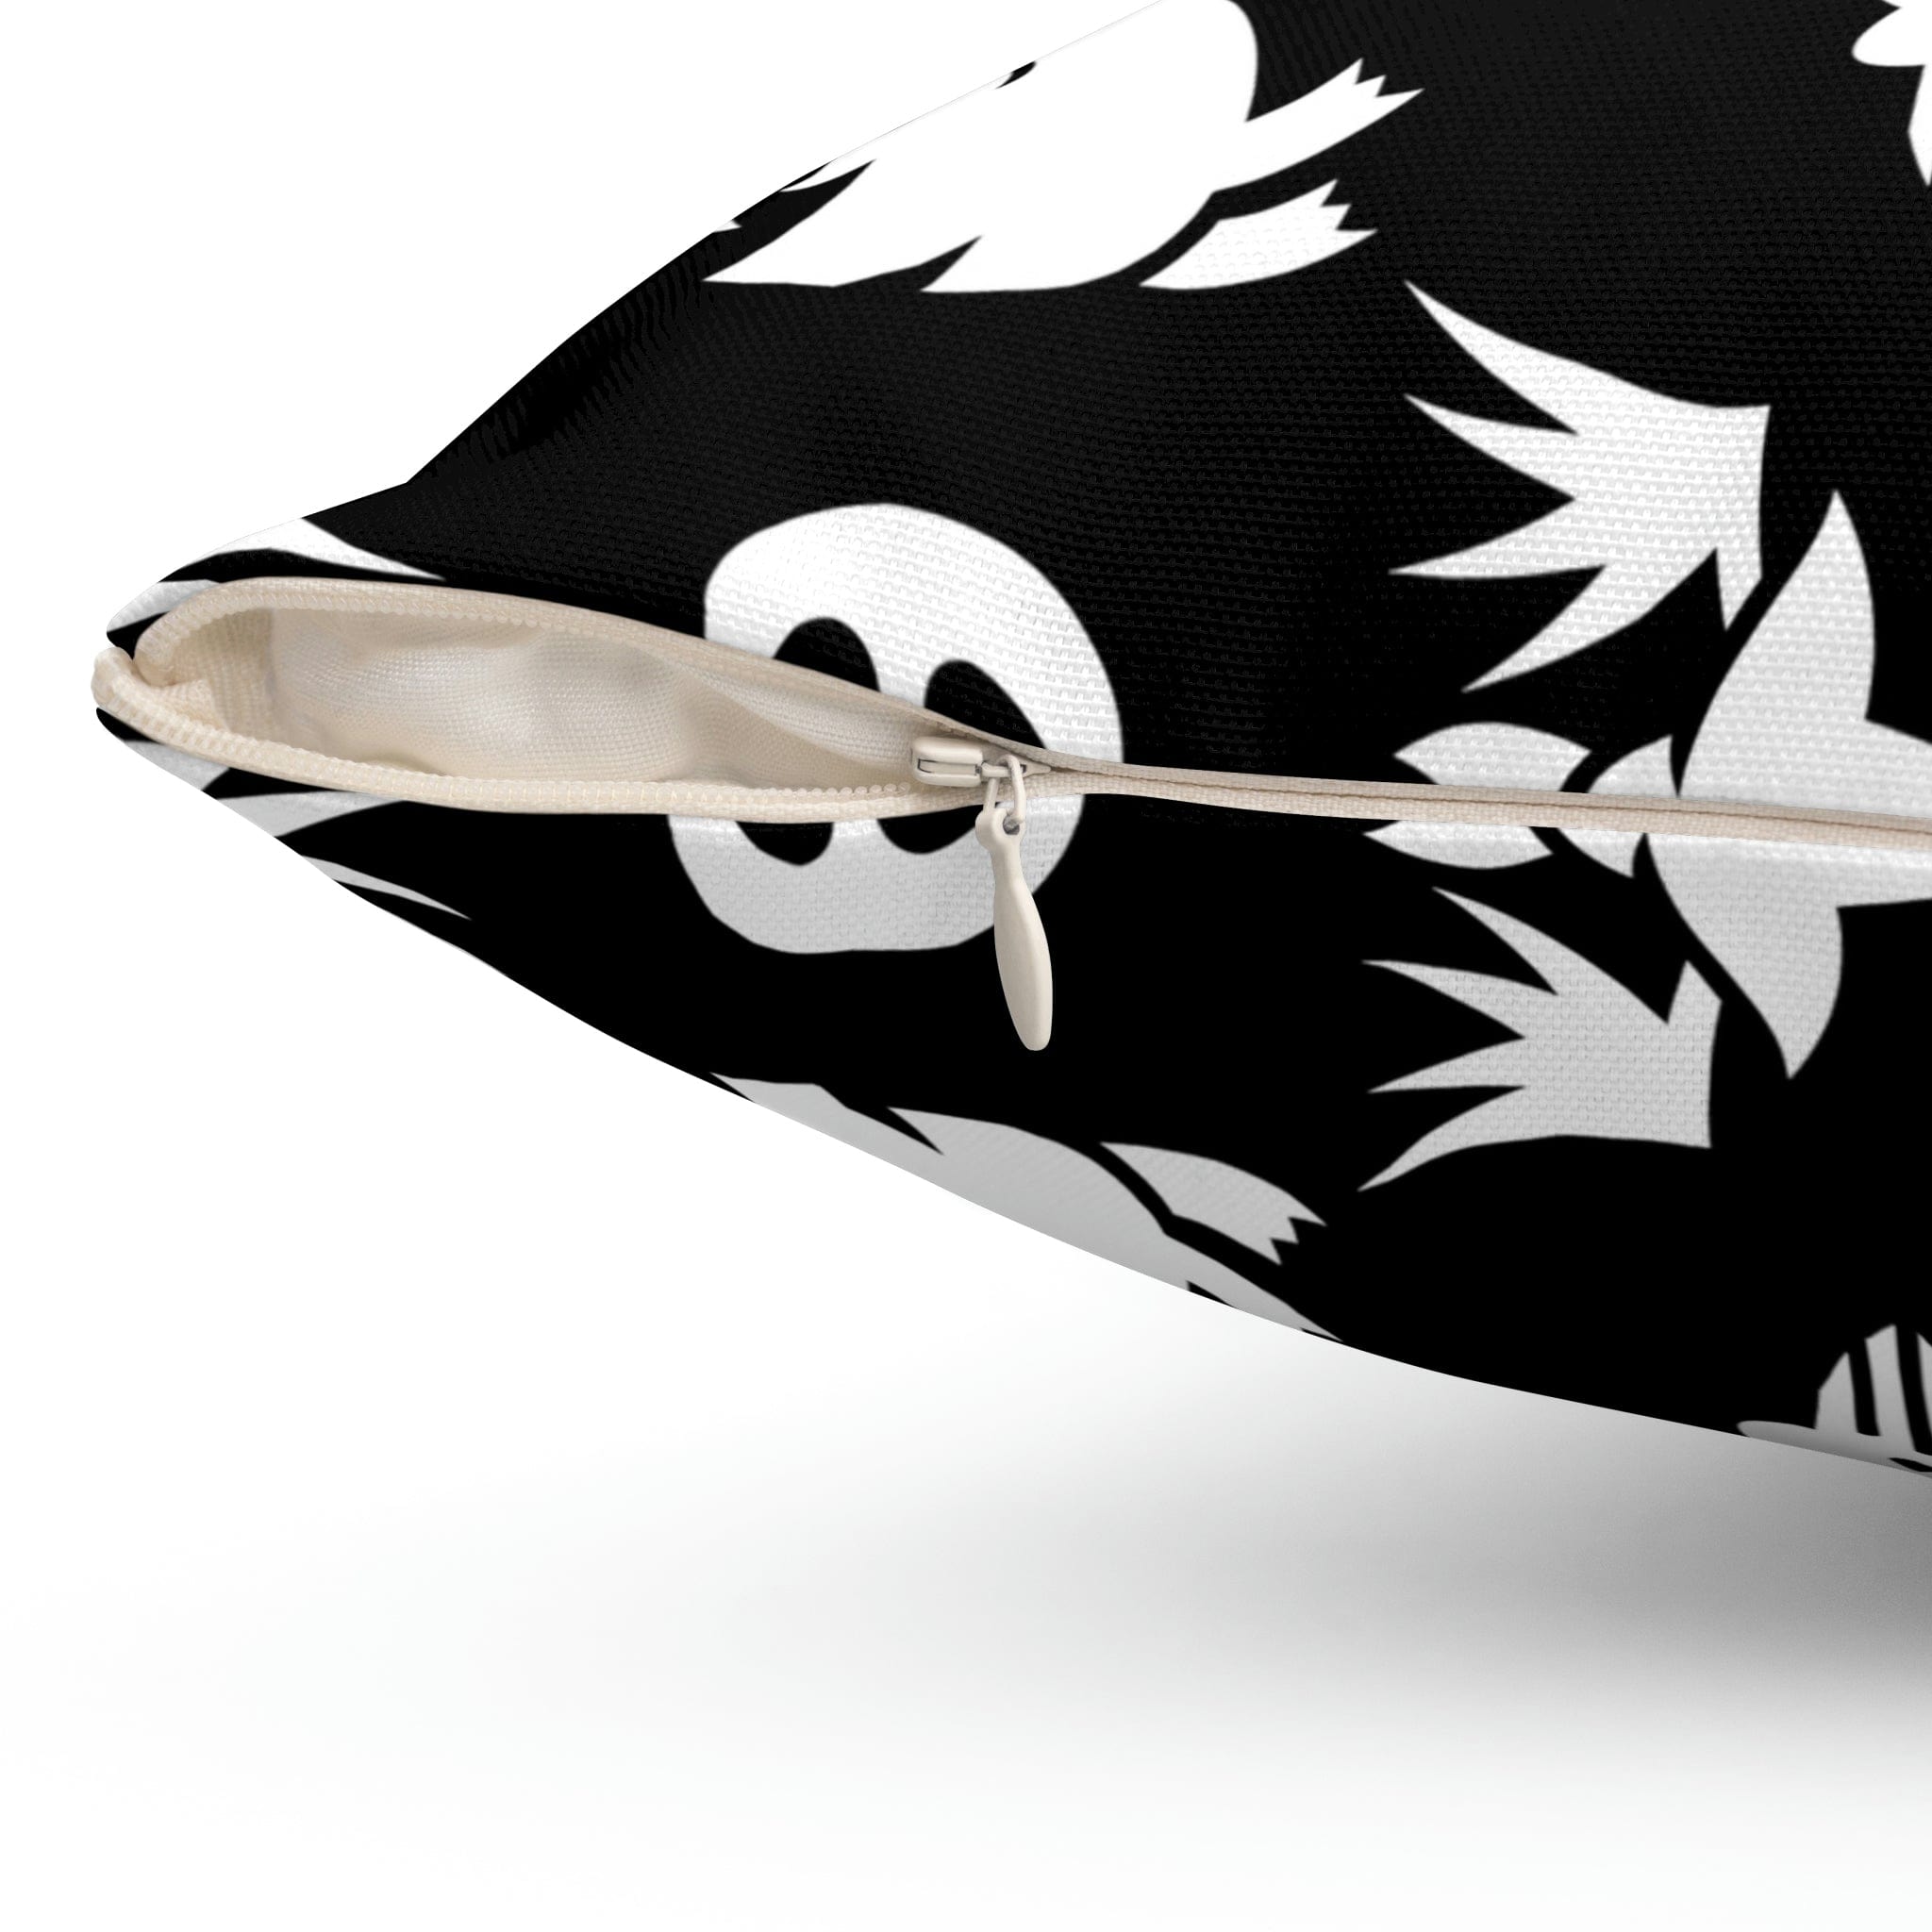 Kate McEnroe New York Halloween Bat And Skull Pillow Case Throw Pillow Covers